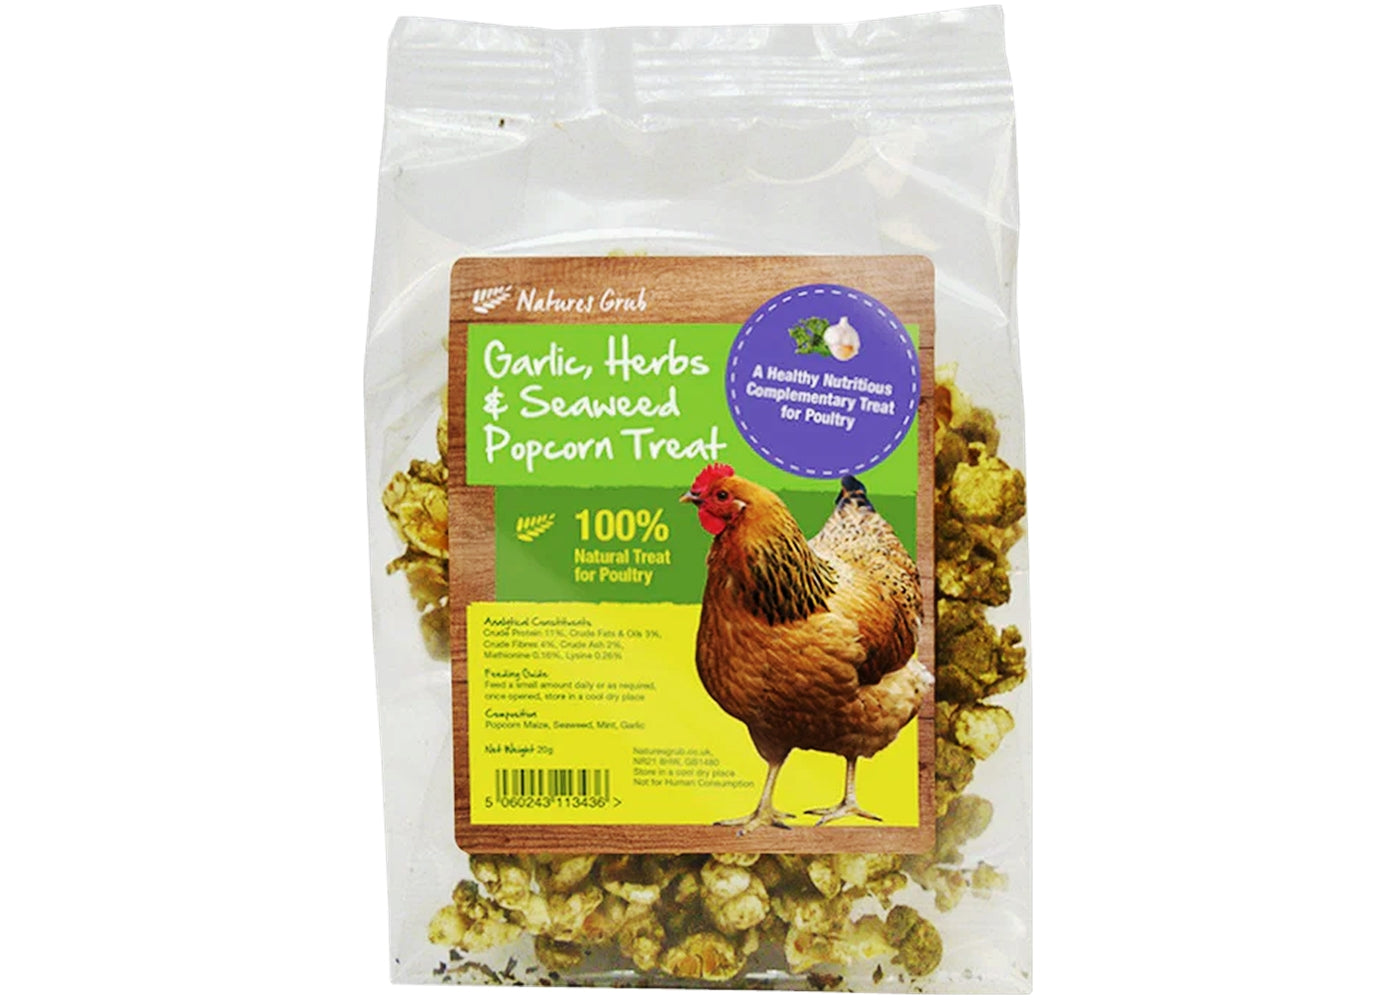 Natures Grub - Garlic, Herbs & Seaweed Popcorn Treat - 20g